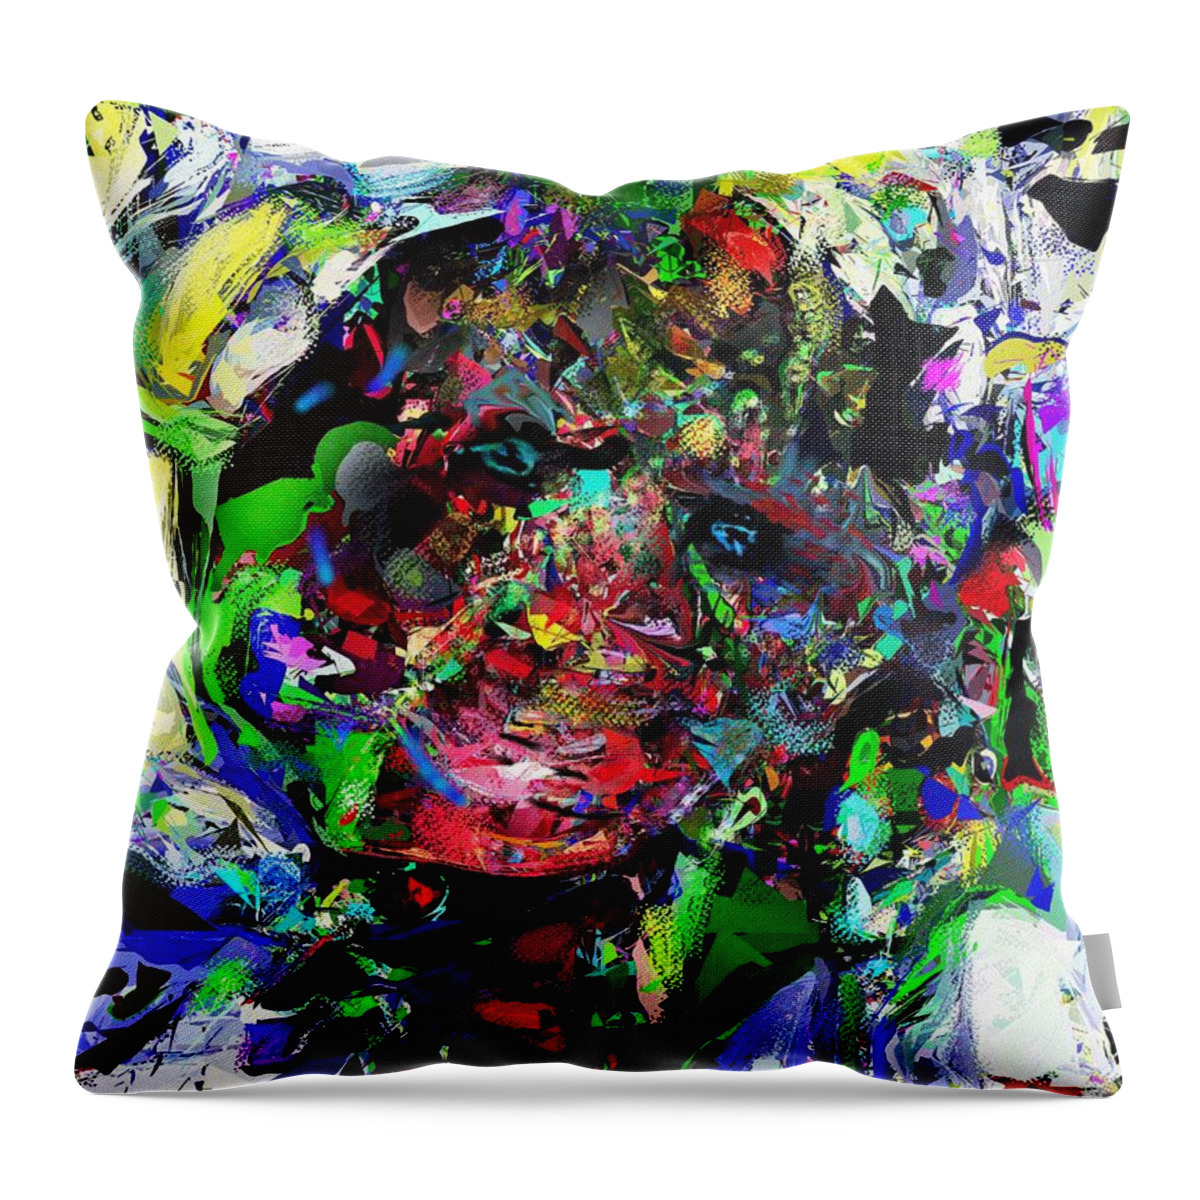 Fine Art Throw Pillow featuring the digital art The Thinker by David Lane